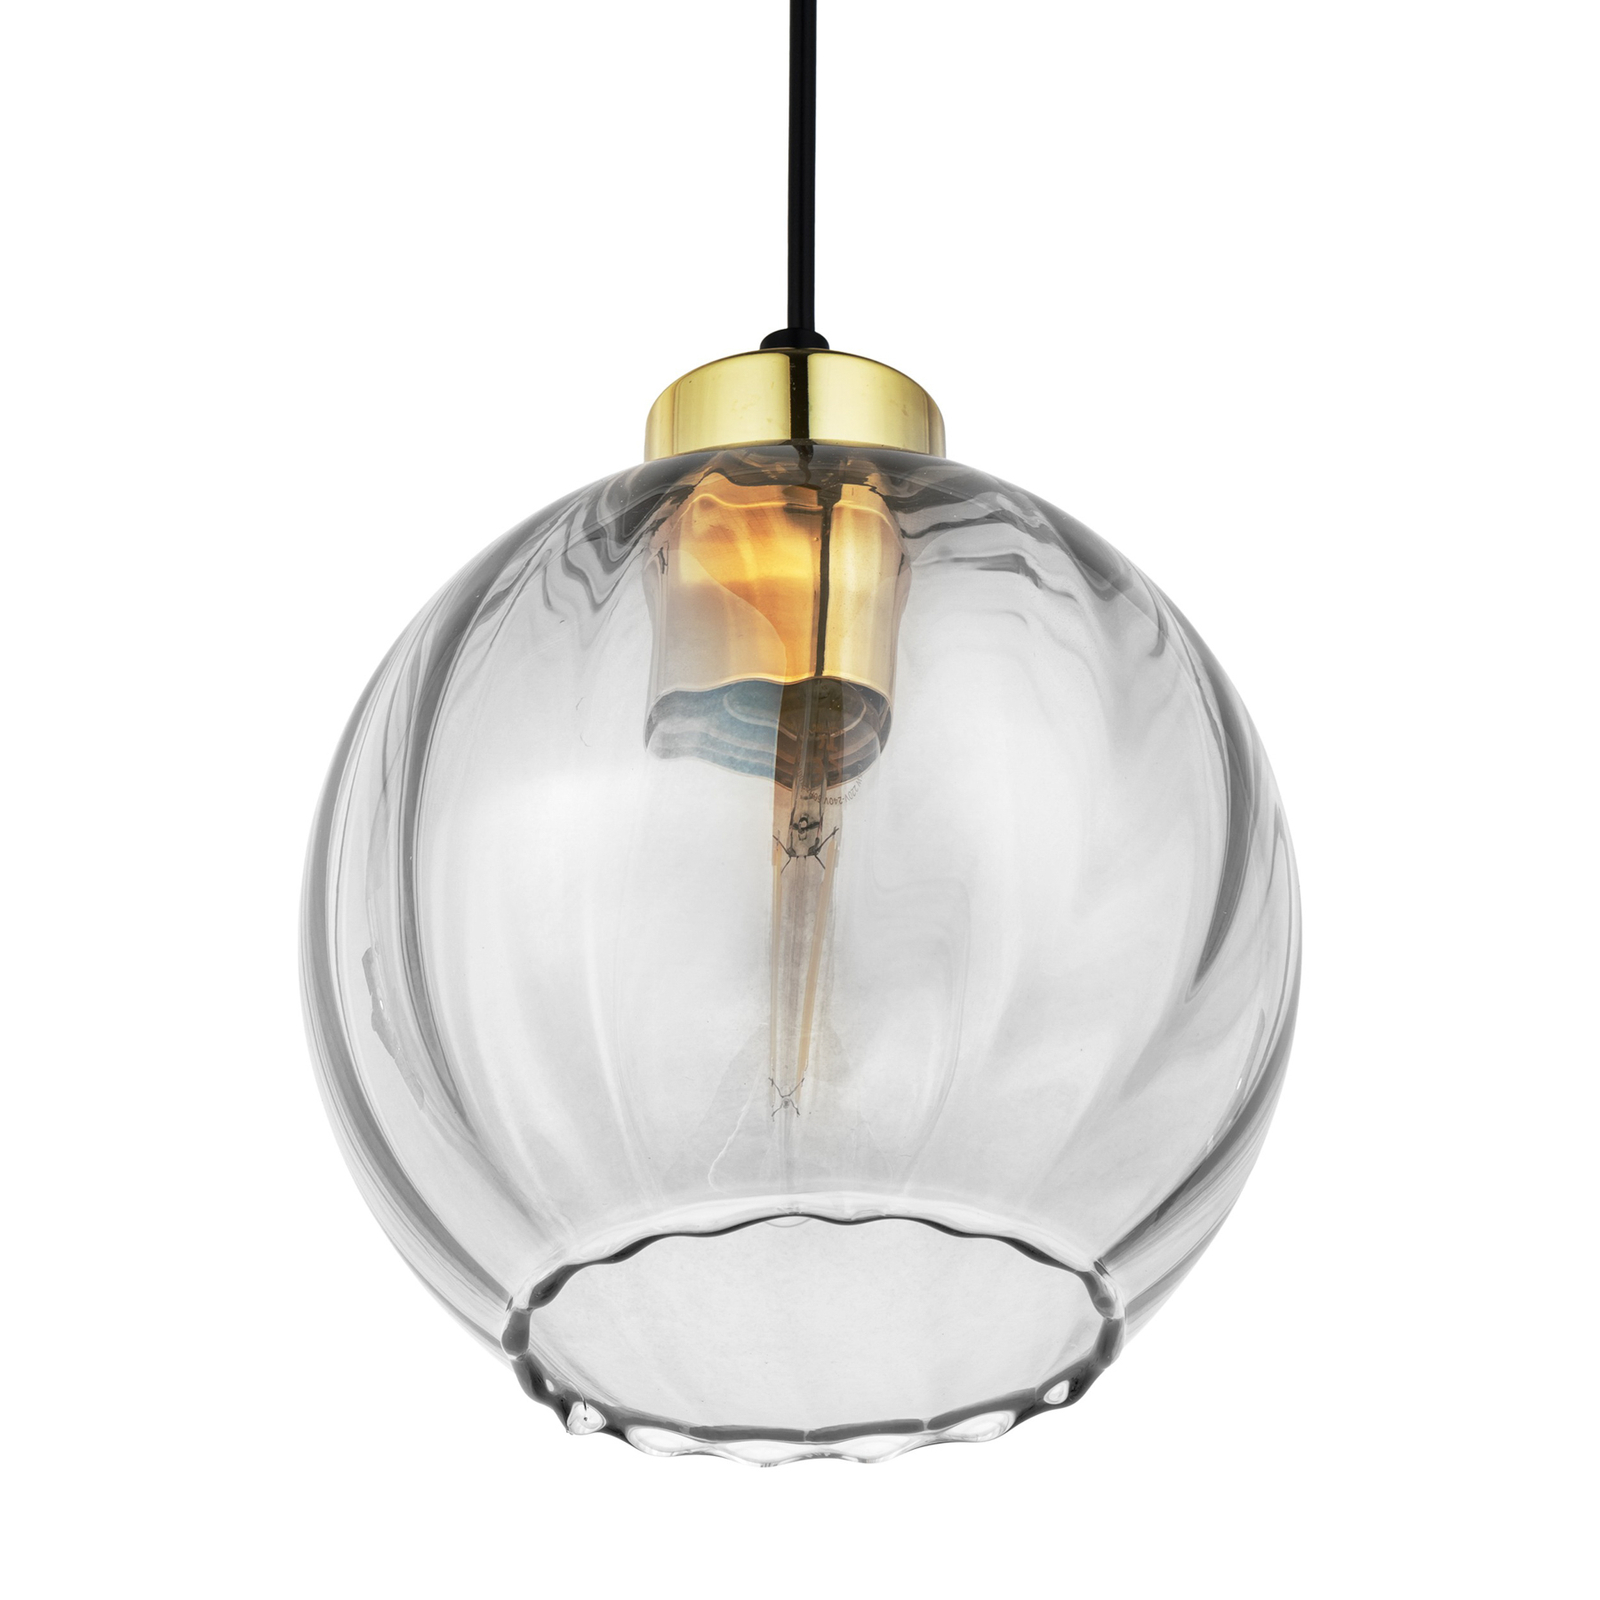 Devi hanglamp, transparant, 1-lamp, Ø 18cm